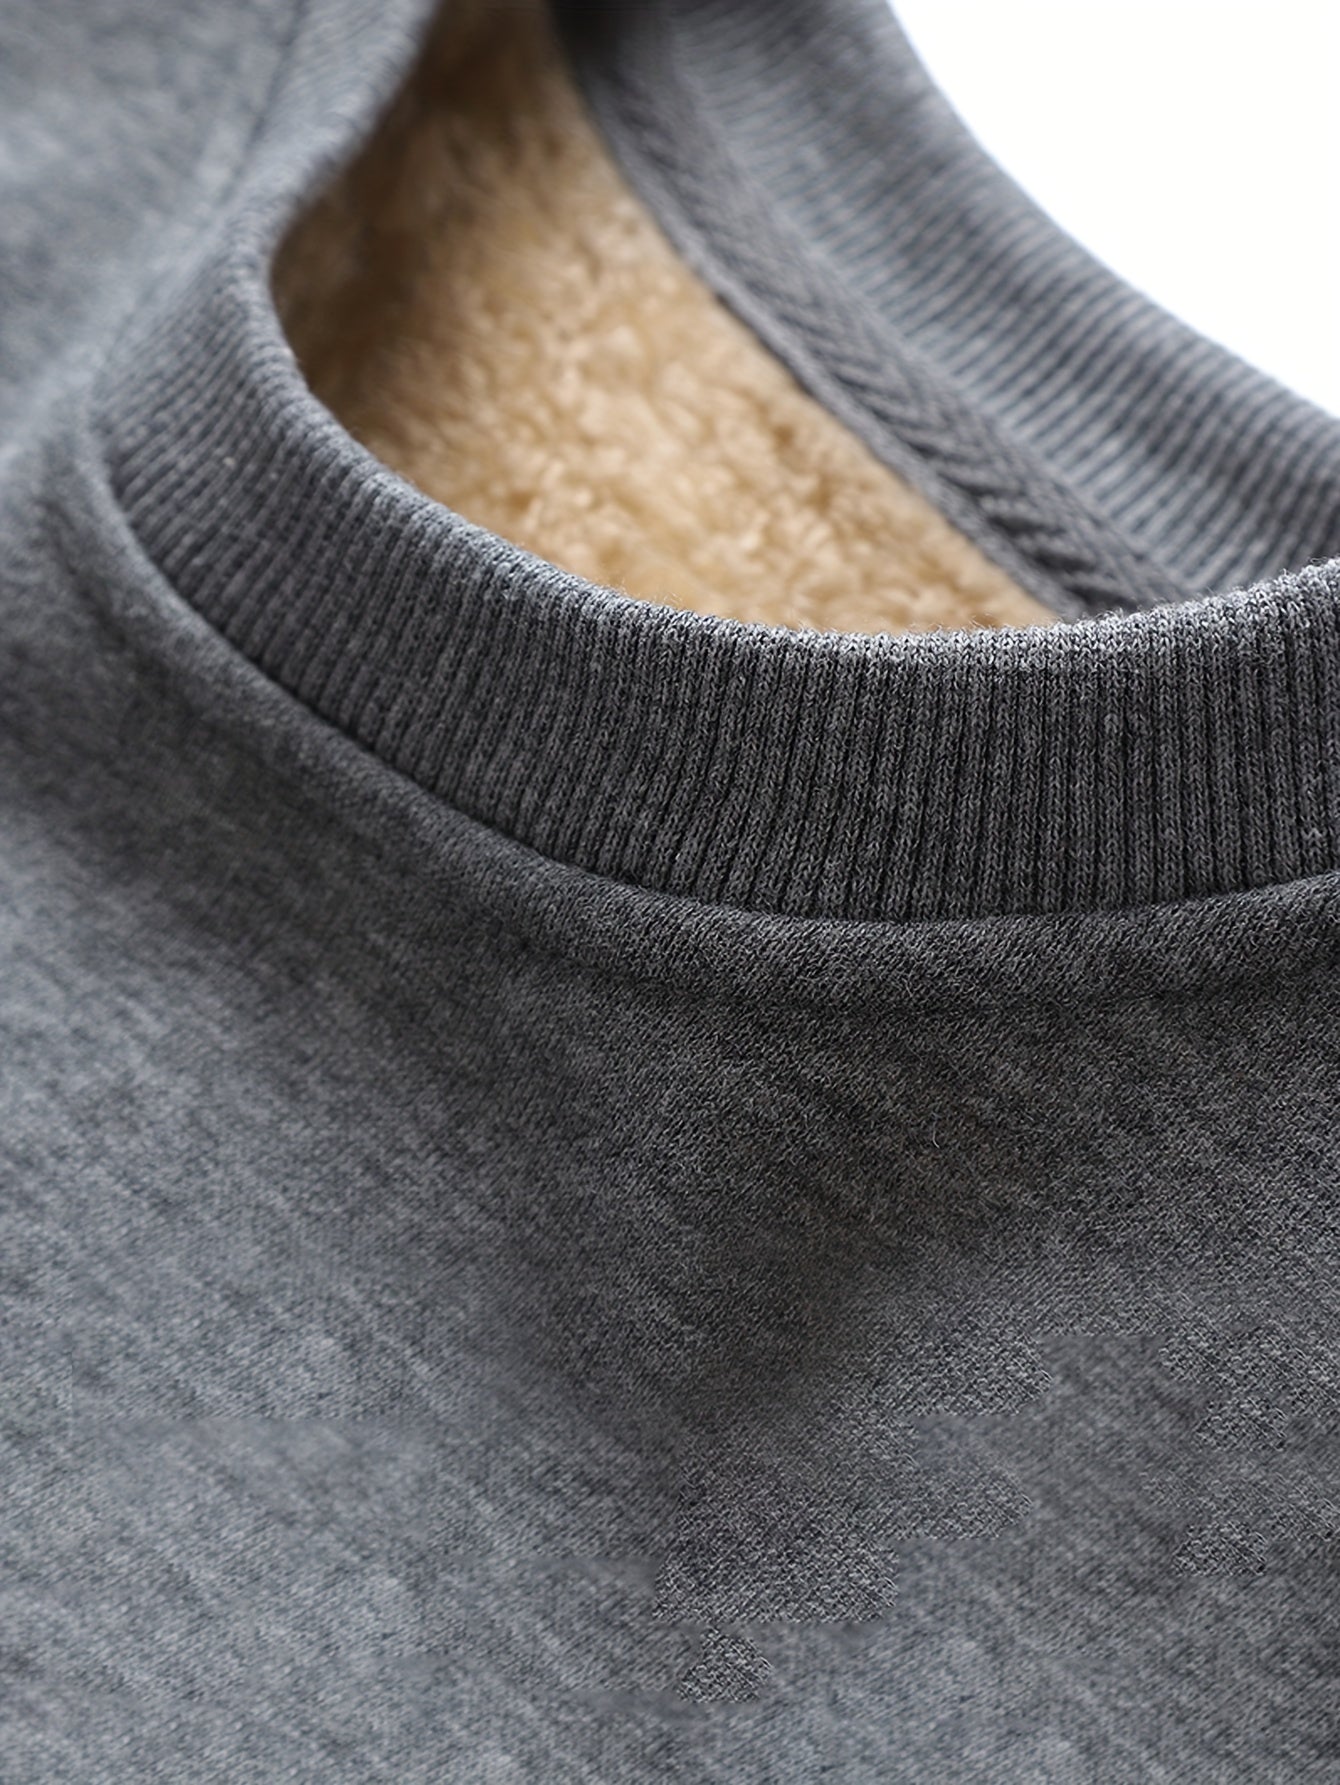 Cotton Blend Men's Crew Neck Sweatshirt Pullover For Men Fleece Sherpa Lined Sweatshirts For Winter Fall Long Sleeve Tops